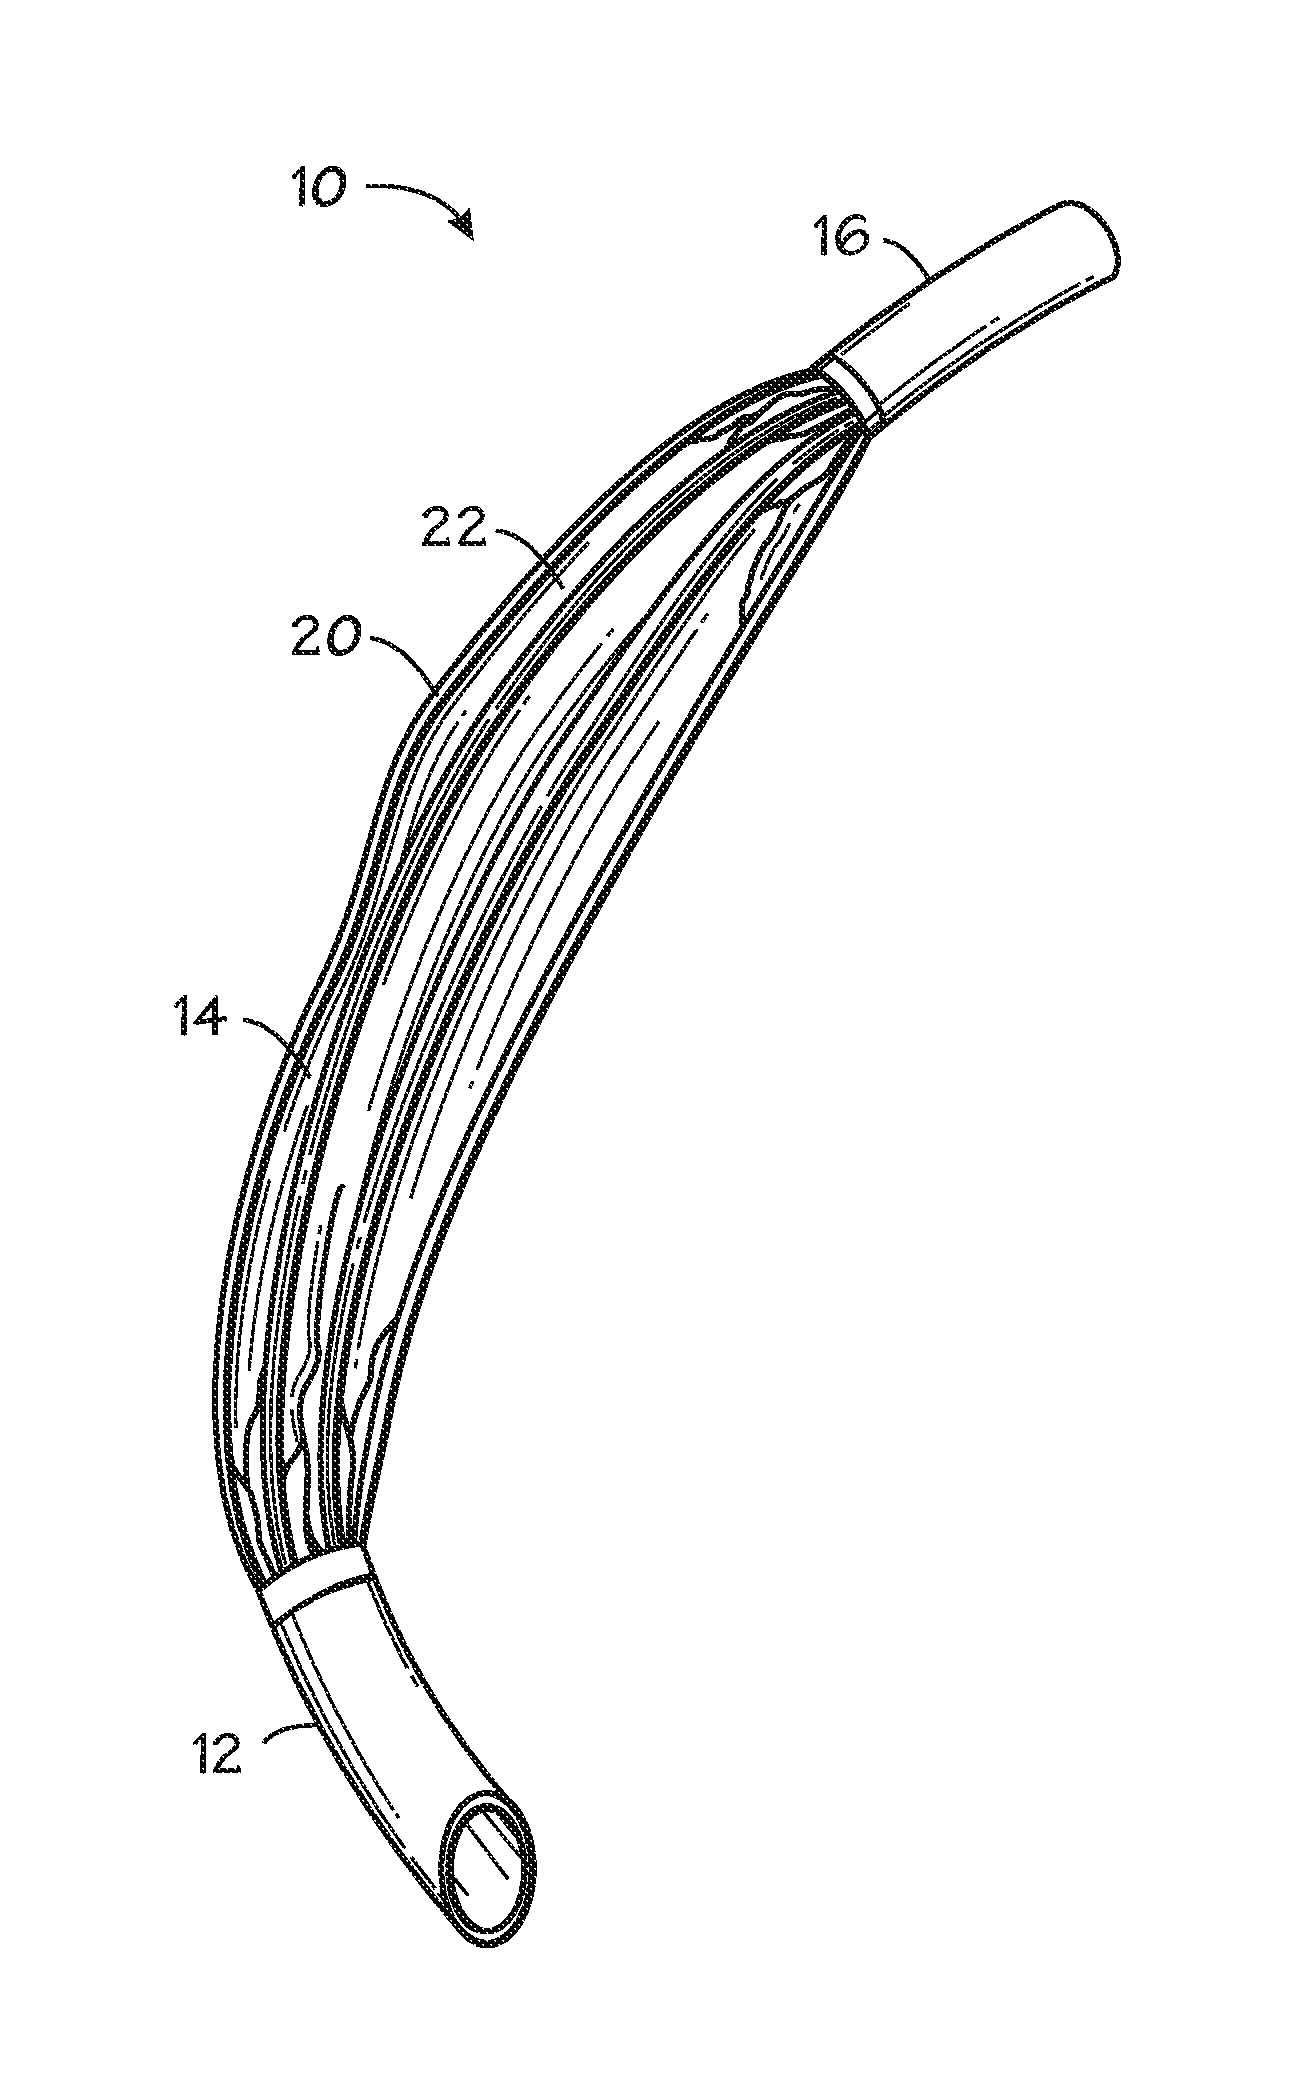 Self-sizing adjustable endotracheal tube